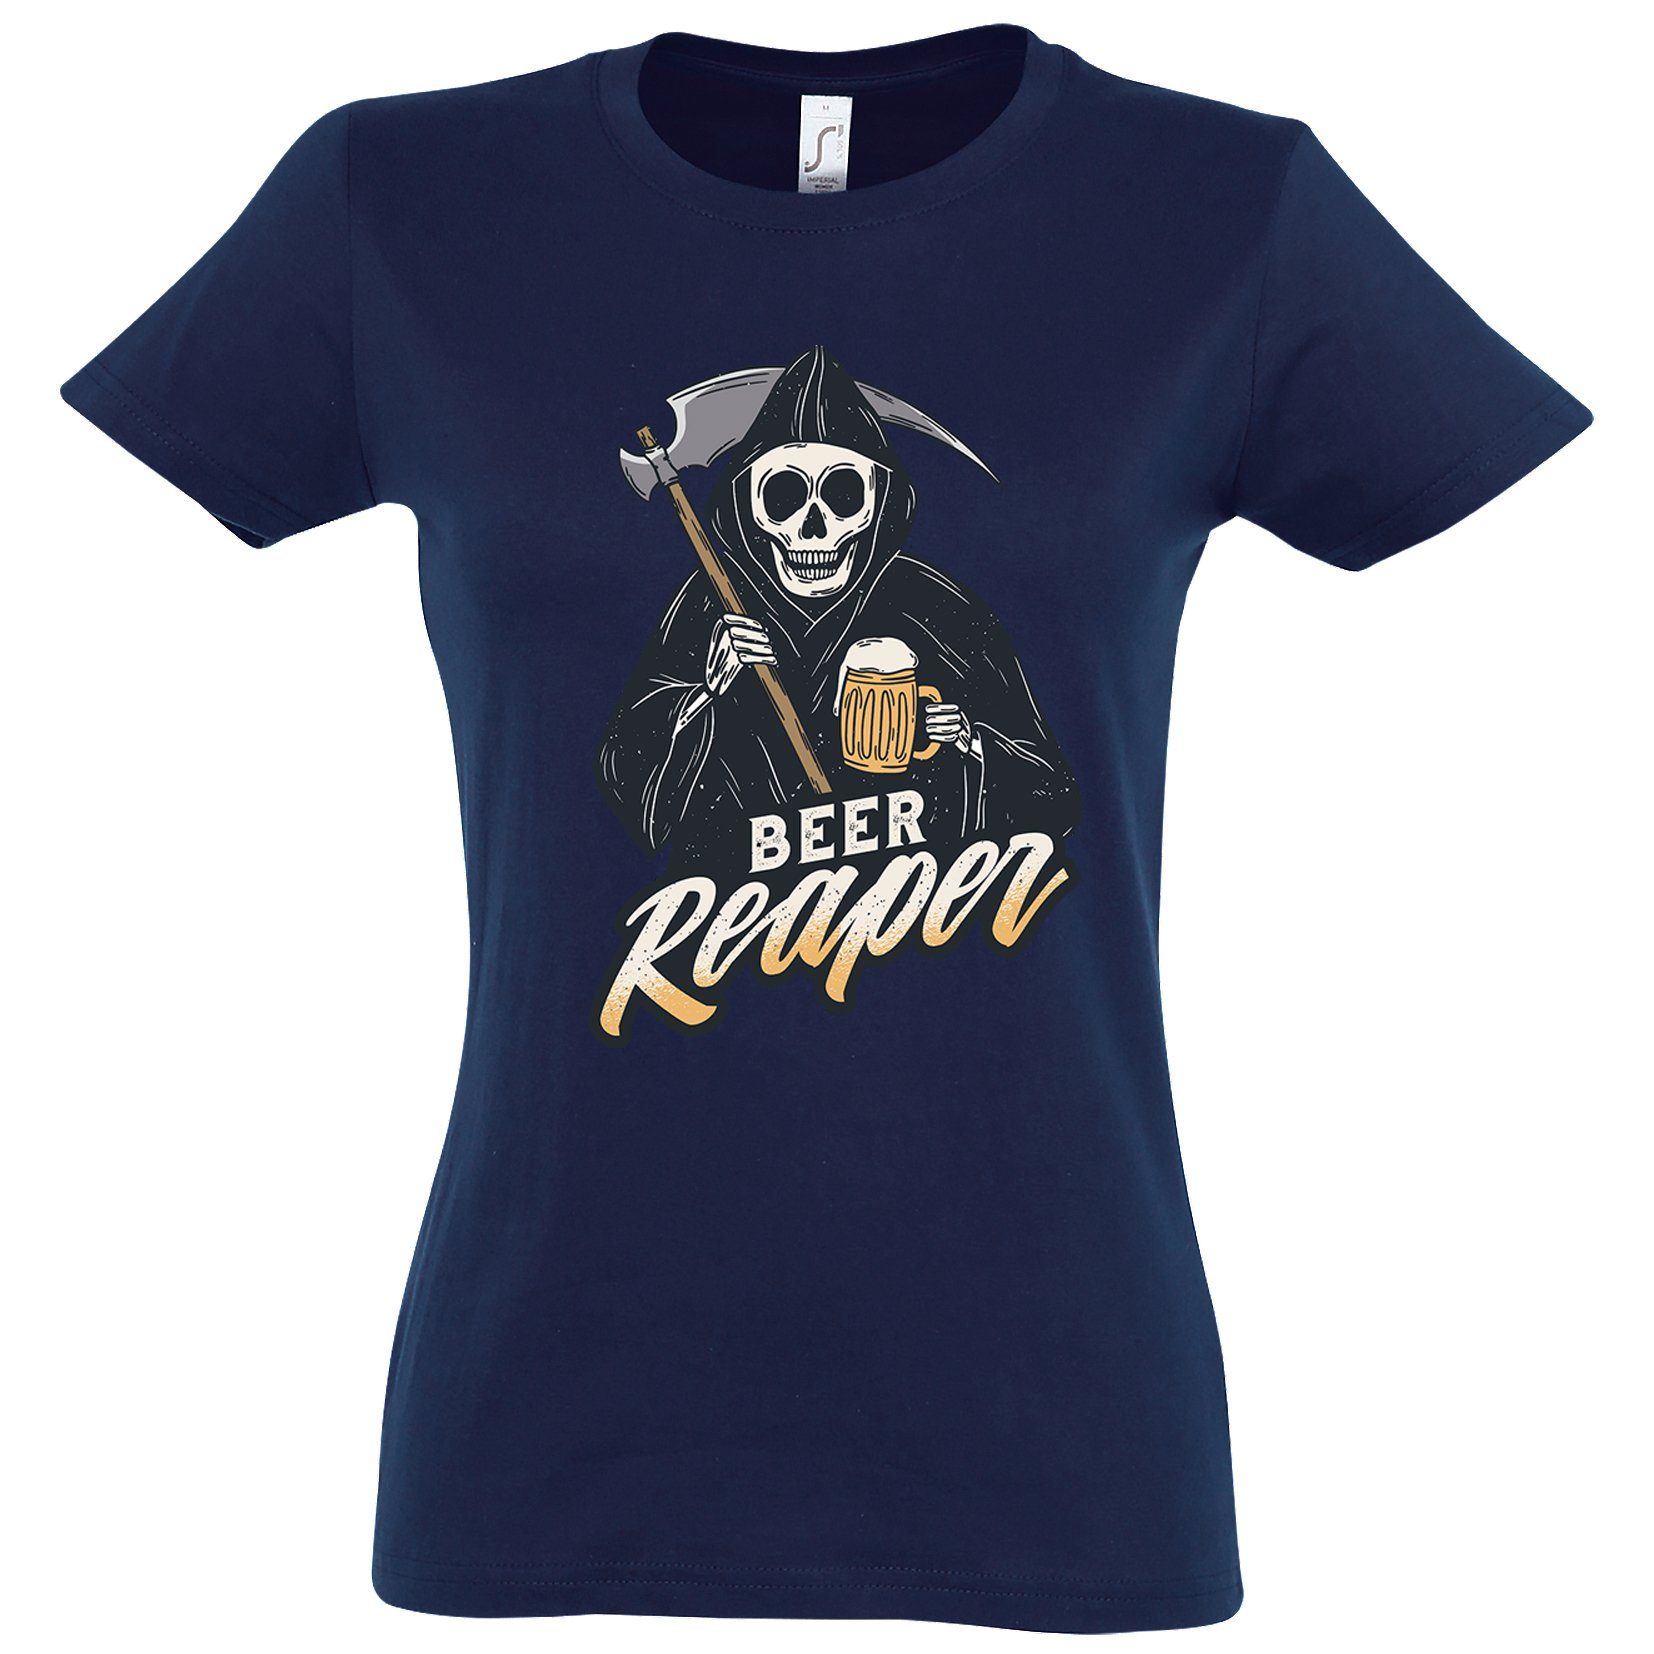 Frontprint lustigem Shirt T-Shirt Designz Reaper Damen Navyblau Bier mit Youth